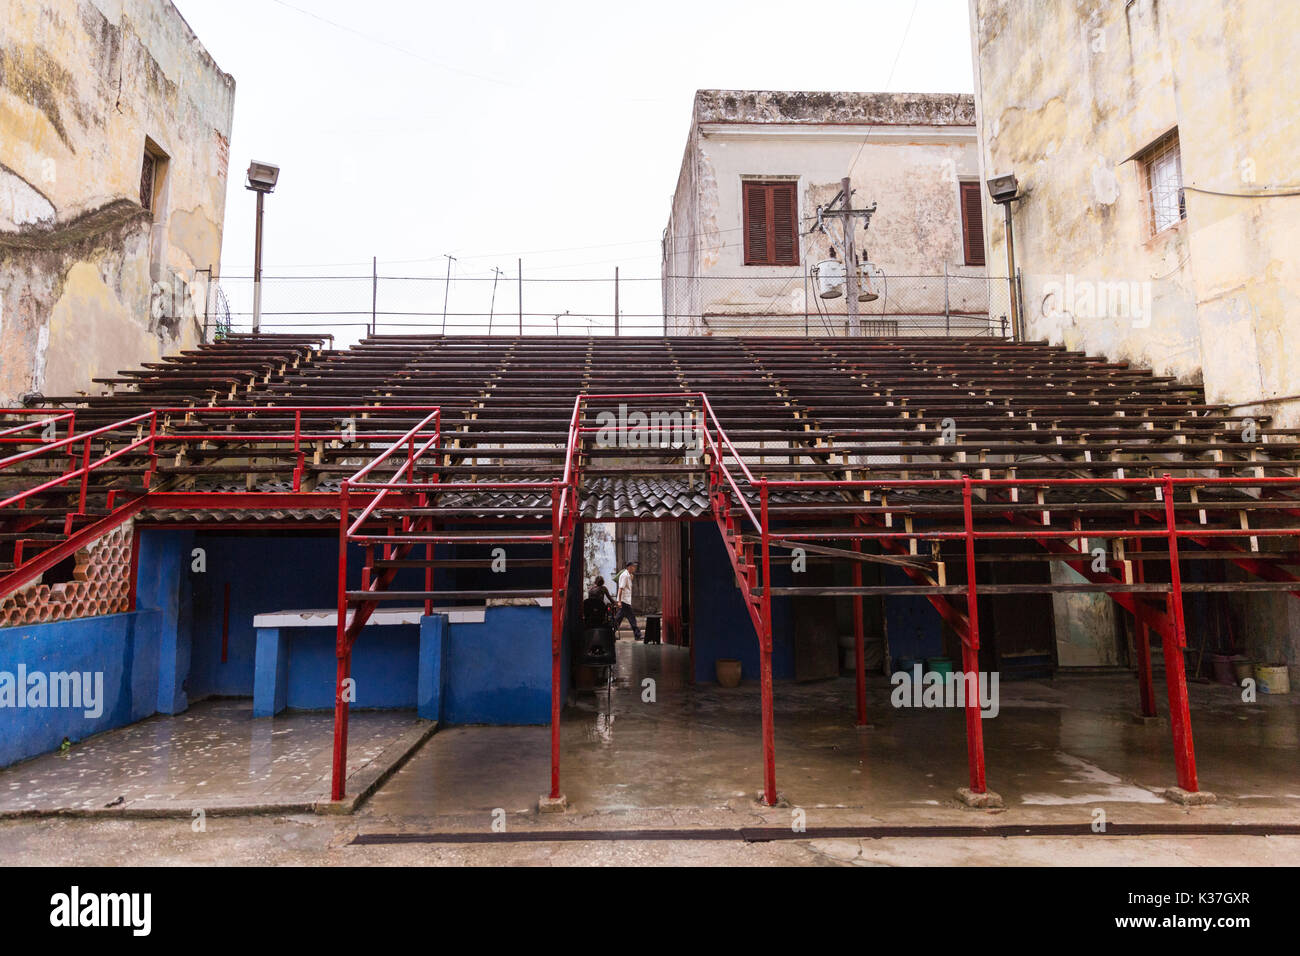 Open air seating interior at the popular Gimnasio  Rafael Trejo boxing ring and venue in Habana Vieja, Havana, Cuba Stock Photo